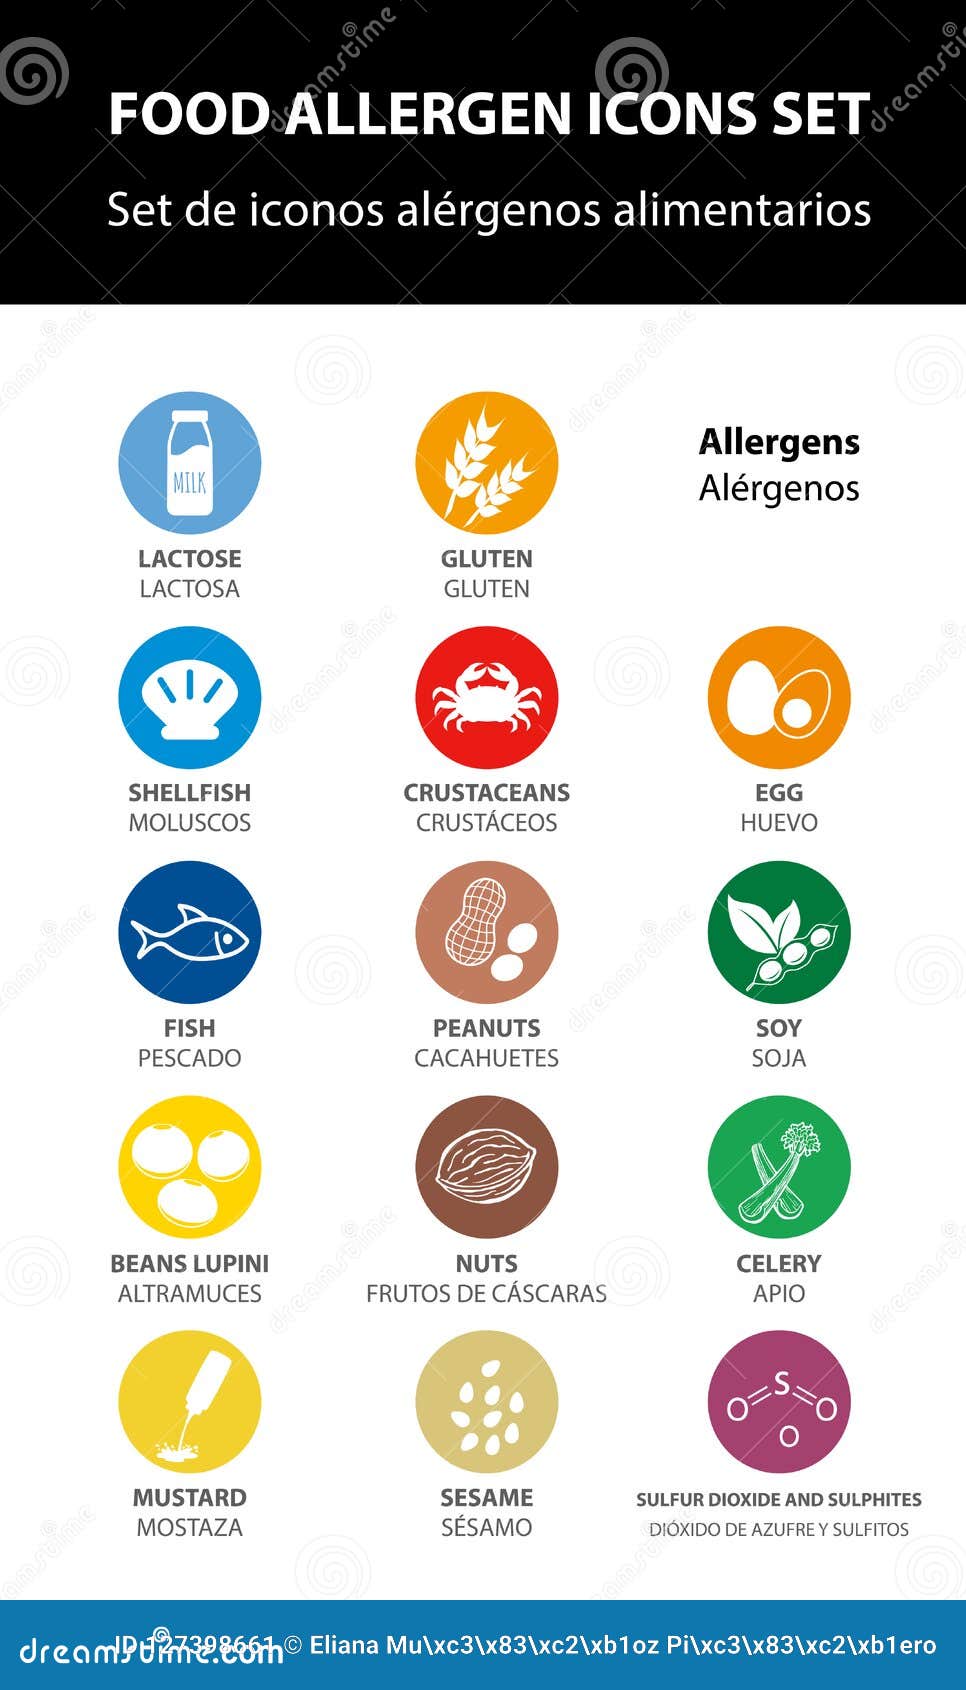 Food Allergen Icons Set, Vector. Stock Illustration - Illustration of